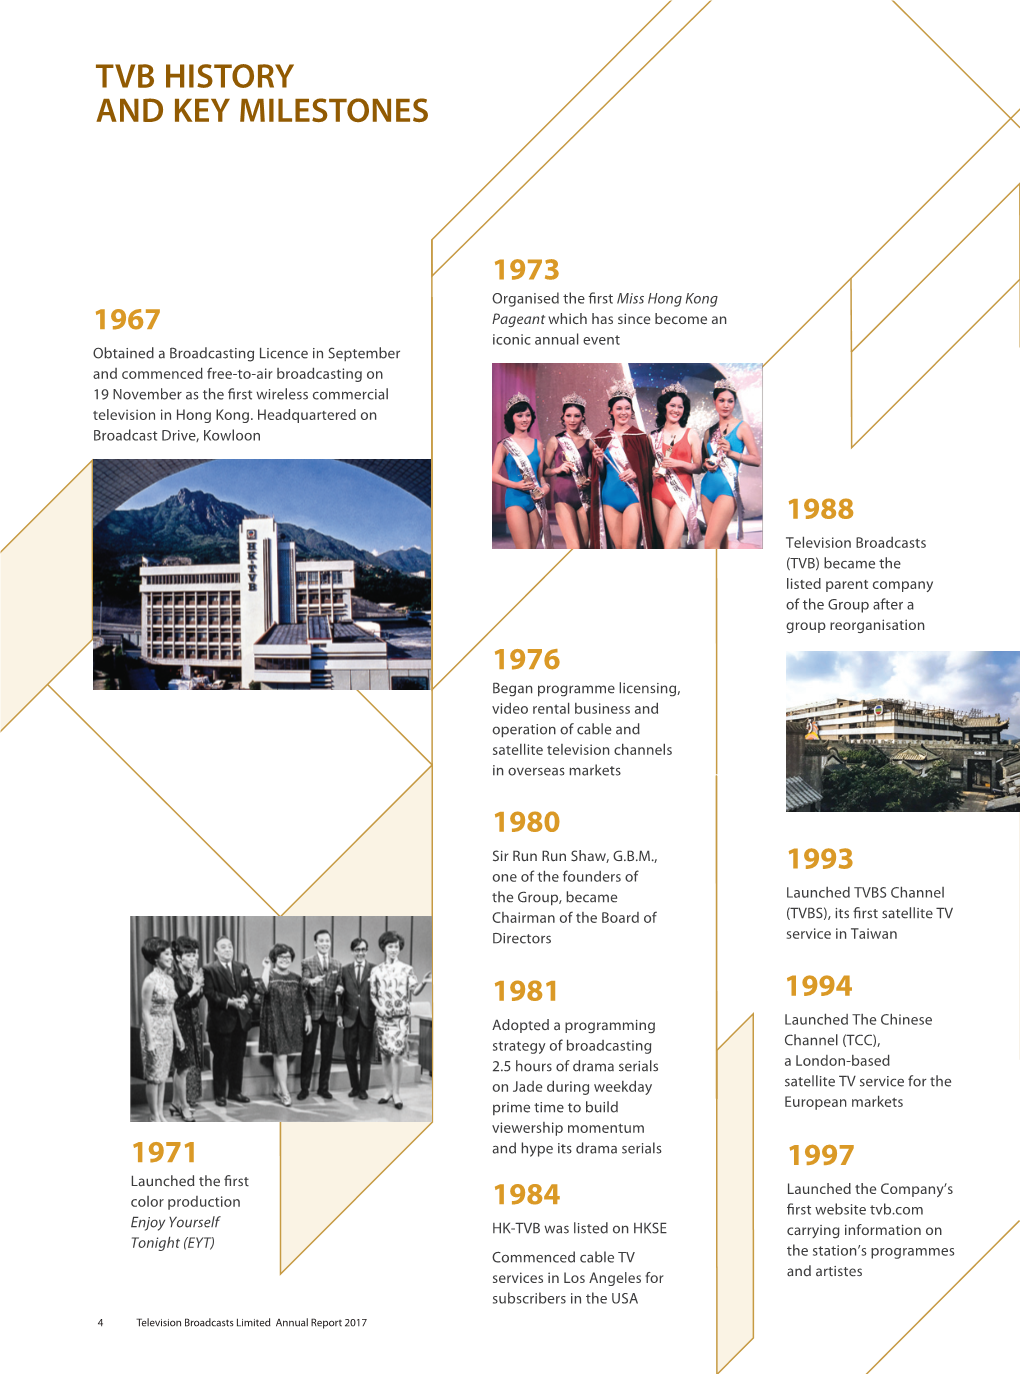 TVB History and Key Milestones